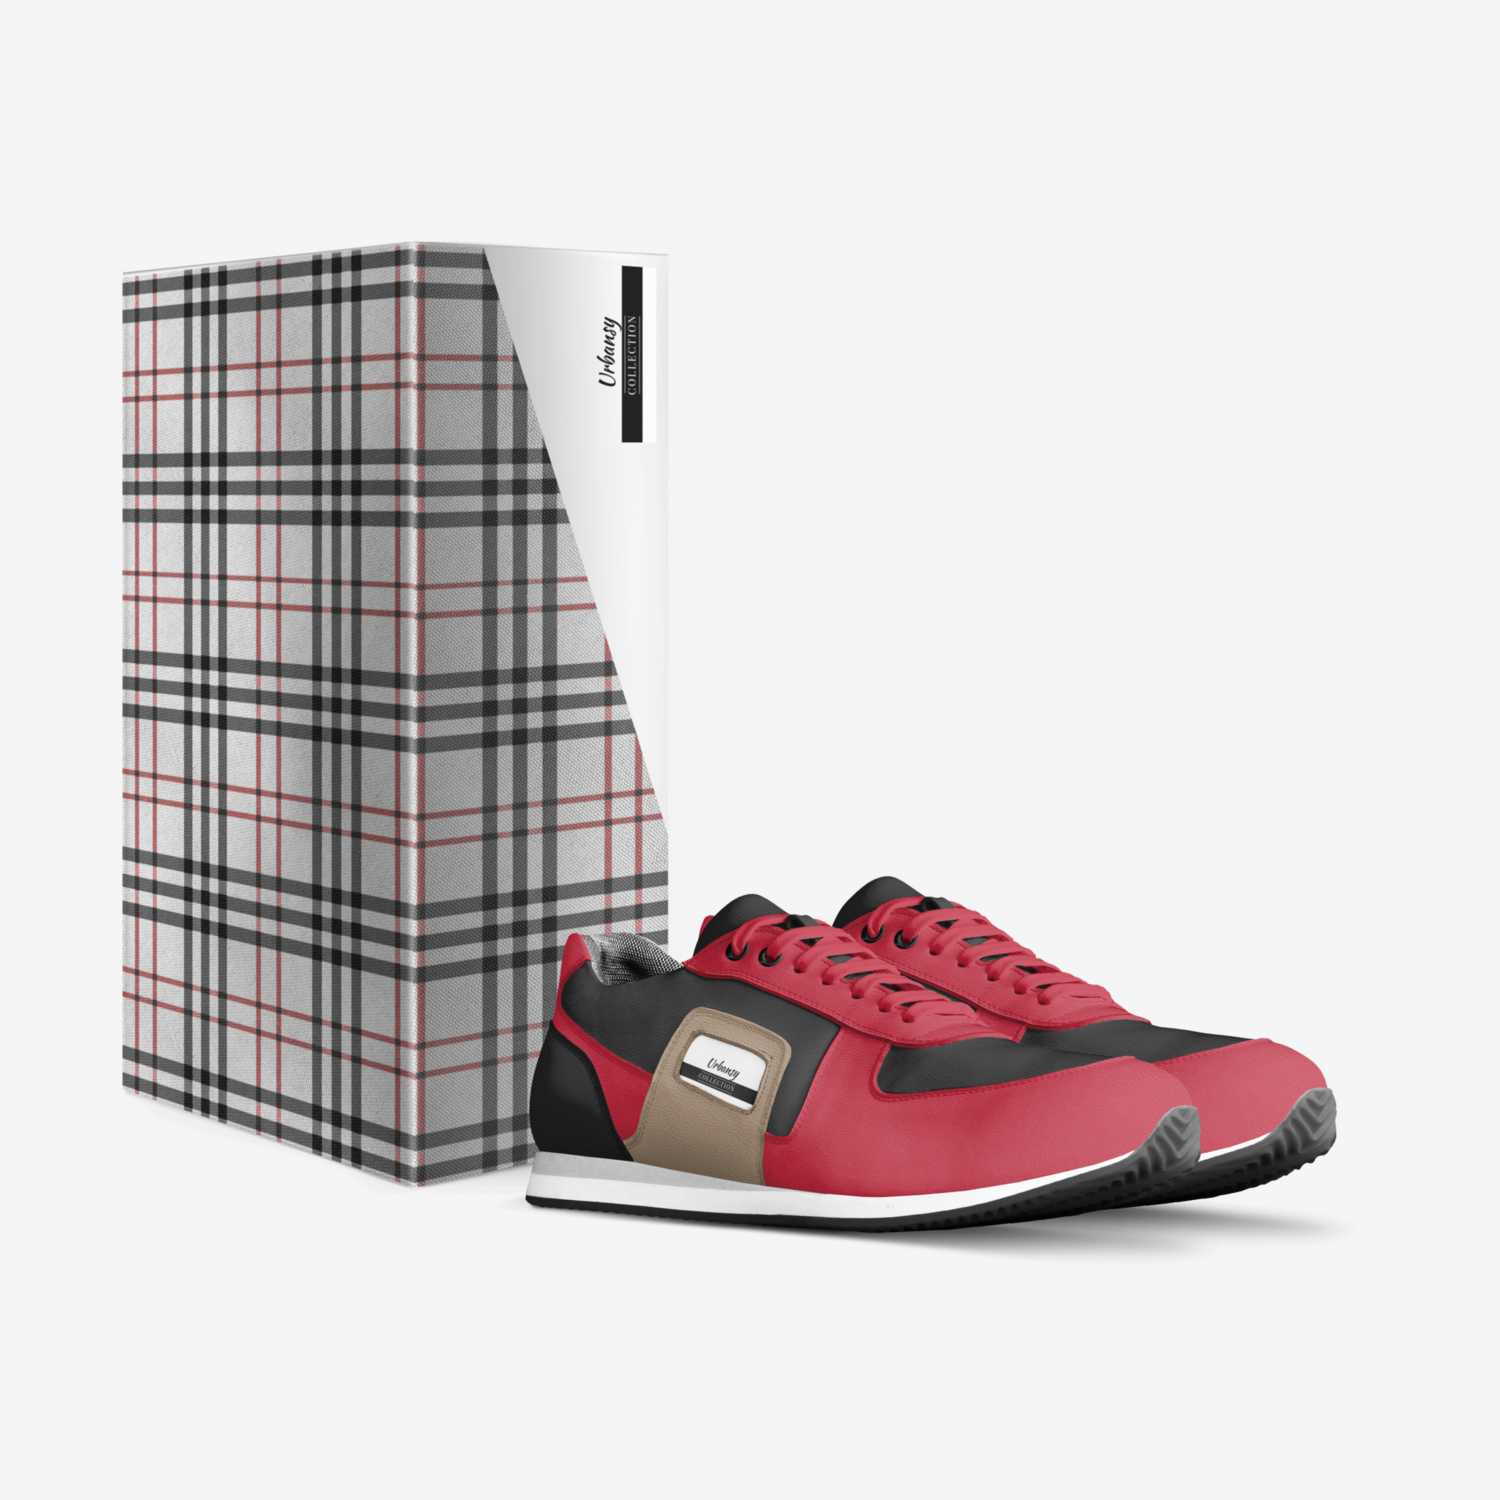 Urbansy custom made in Italy shoes by Keola Harris | Box view